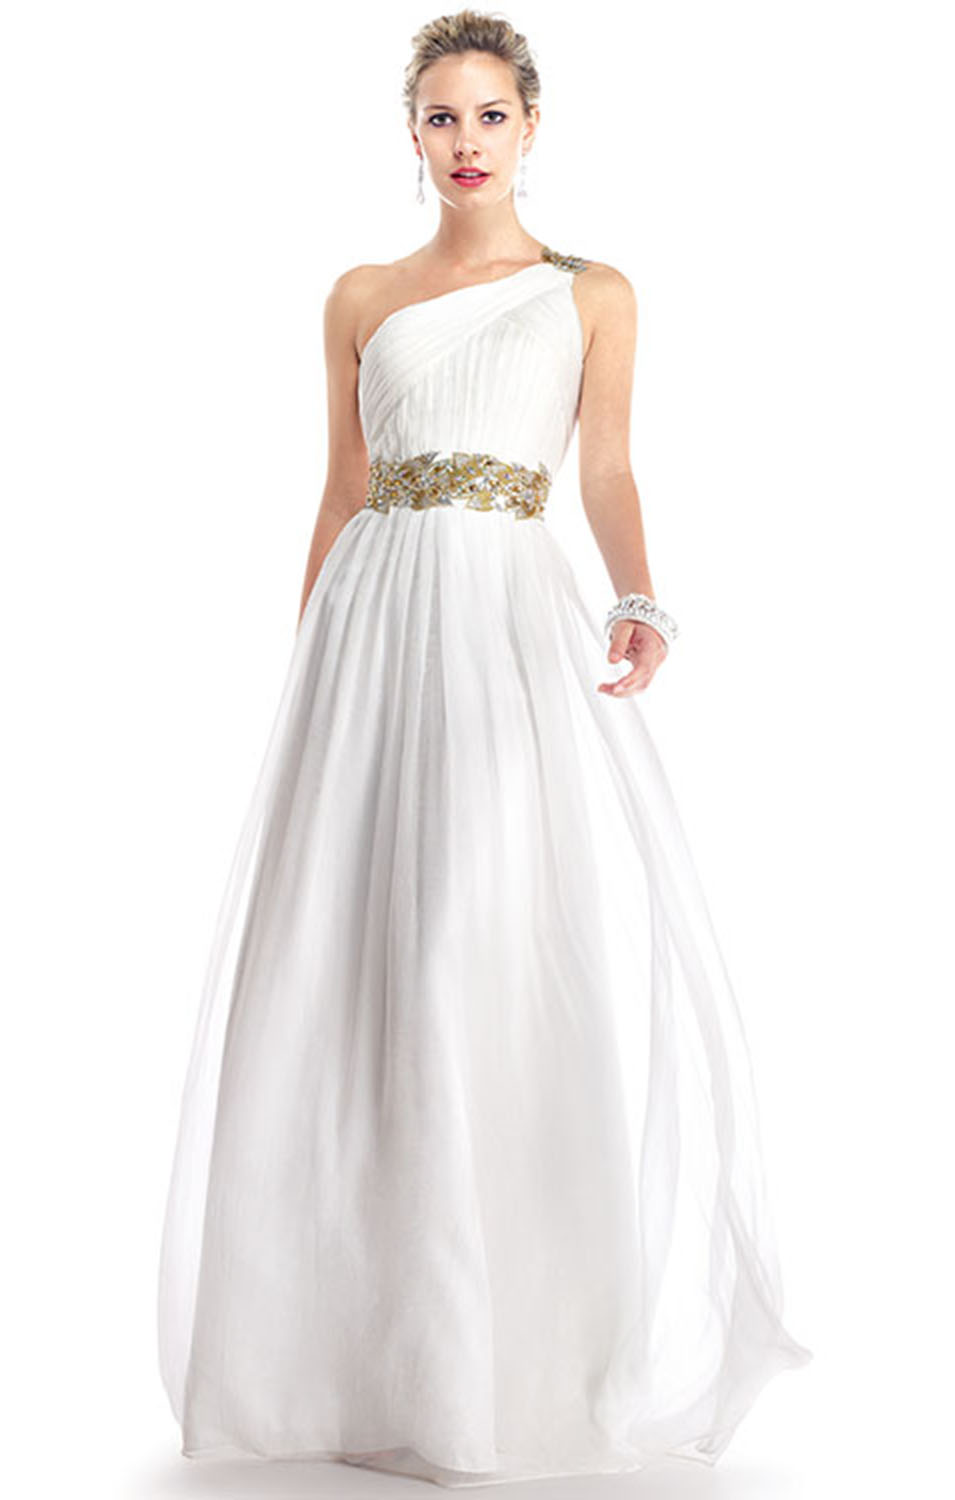 Grecian Gowns & Dresses on Pinterest | Grecian Wedding Dresses, Grecian ...